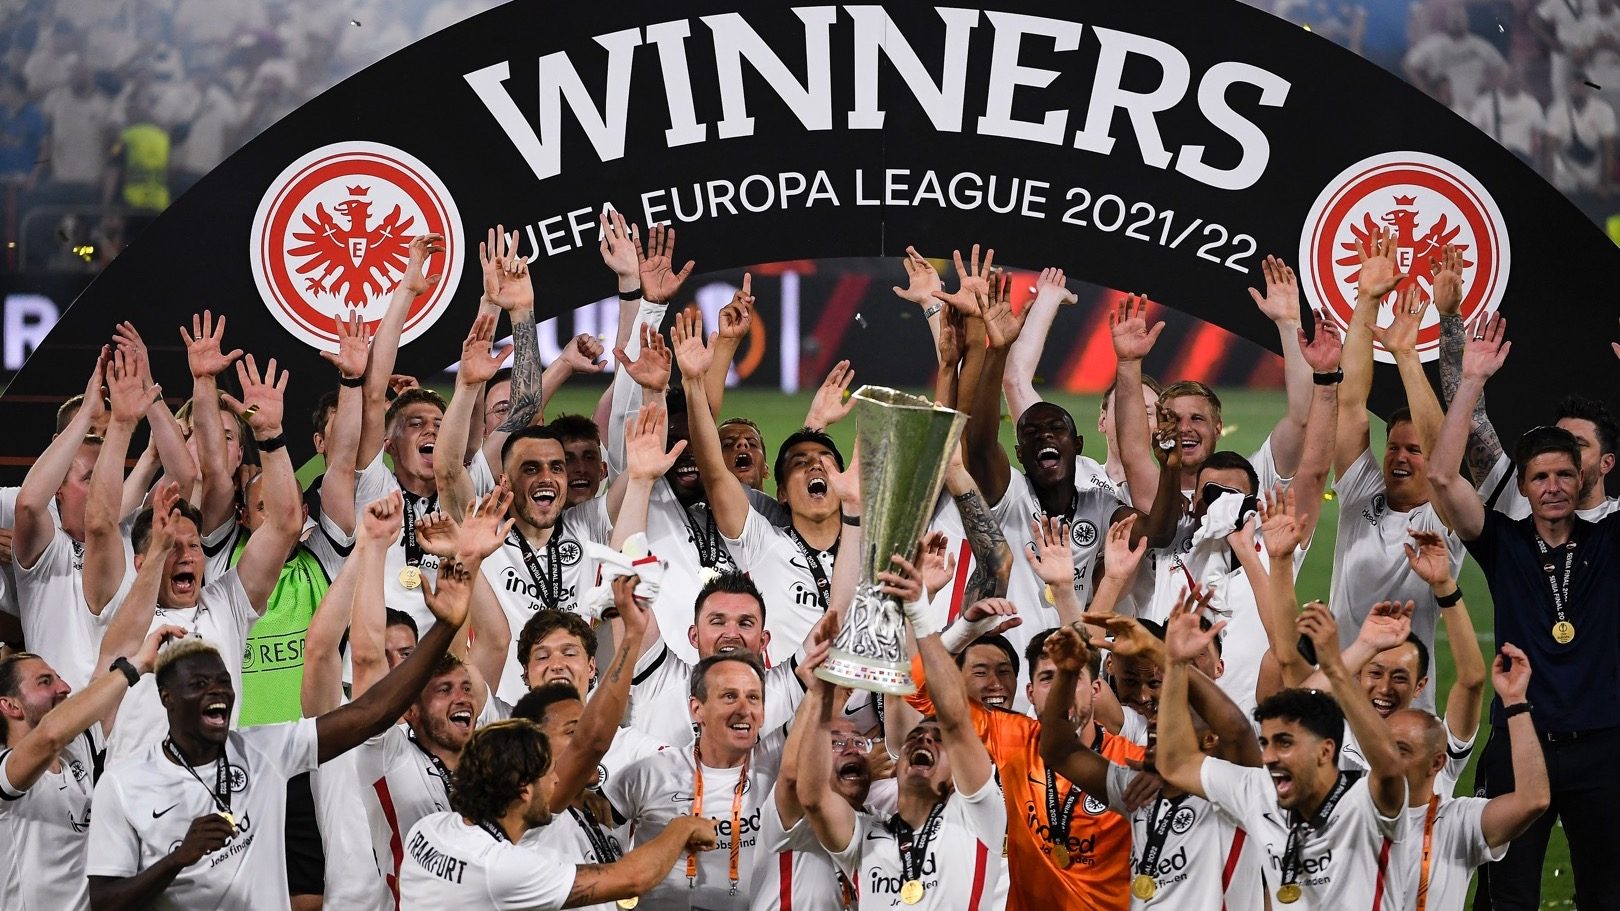 UEFA Europa League winners list: Know all the European champions